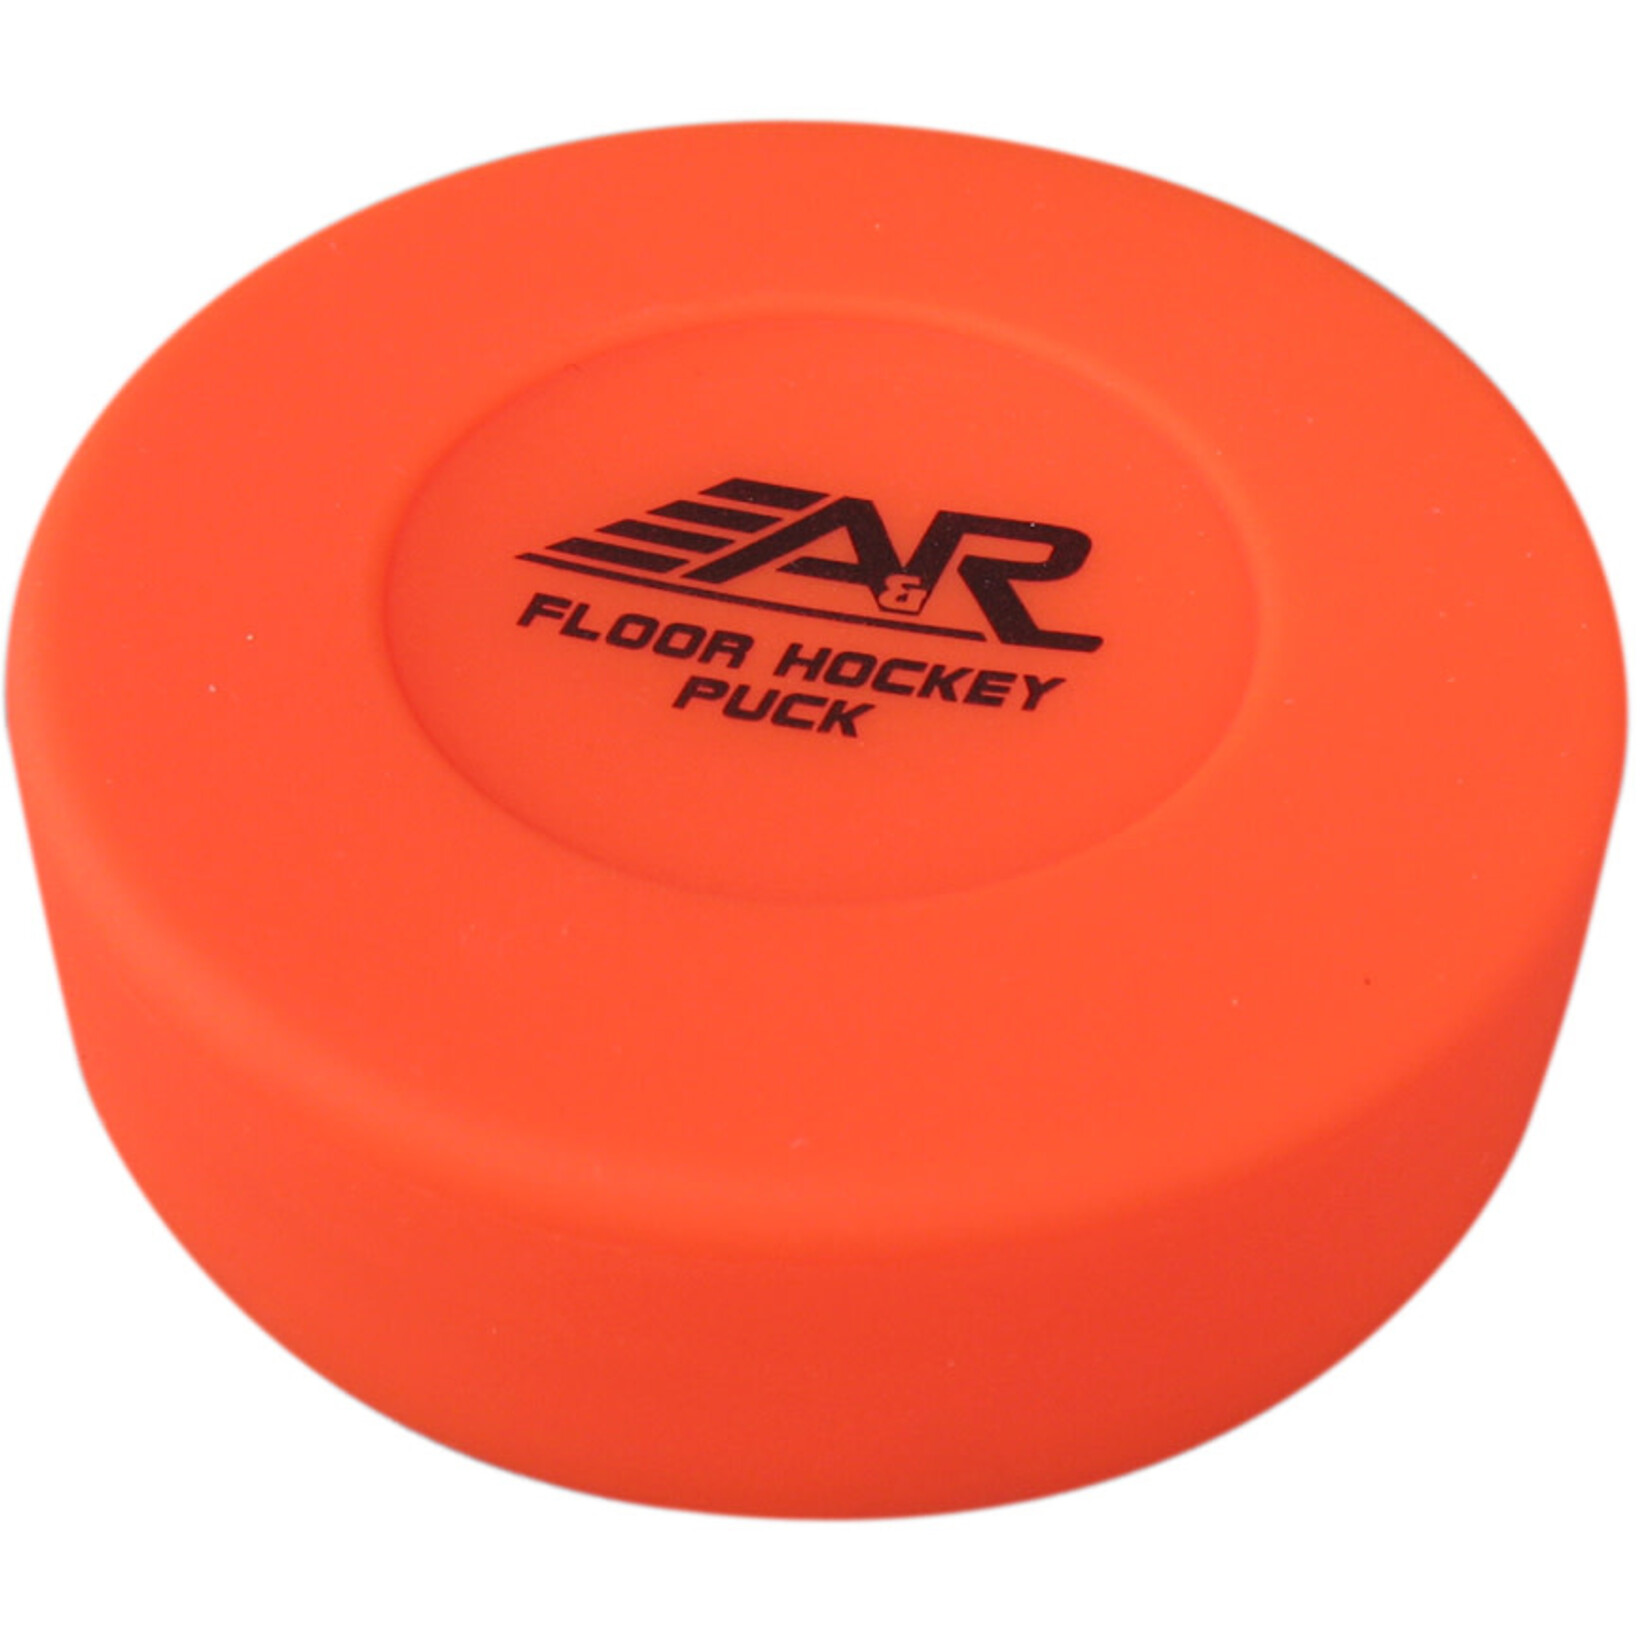 A&R A&R Street Hockey Puck (Orange) Retail Packaged